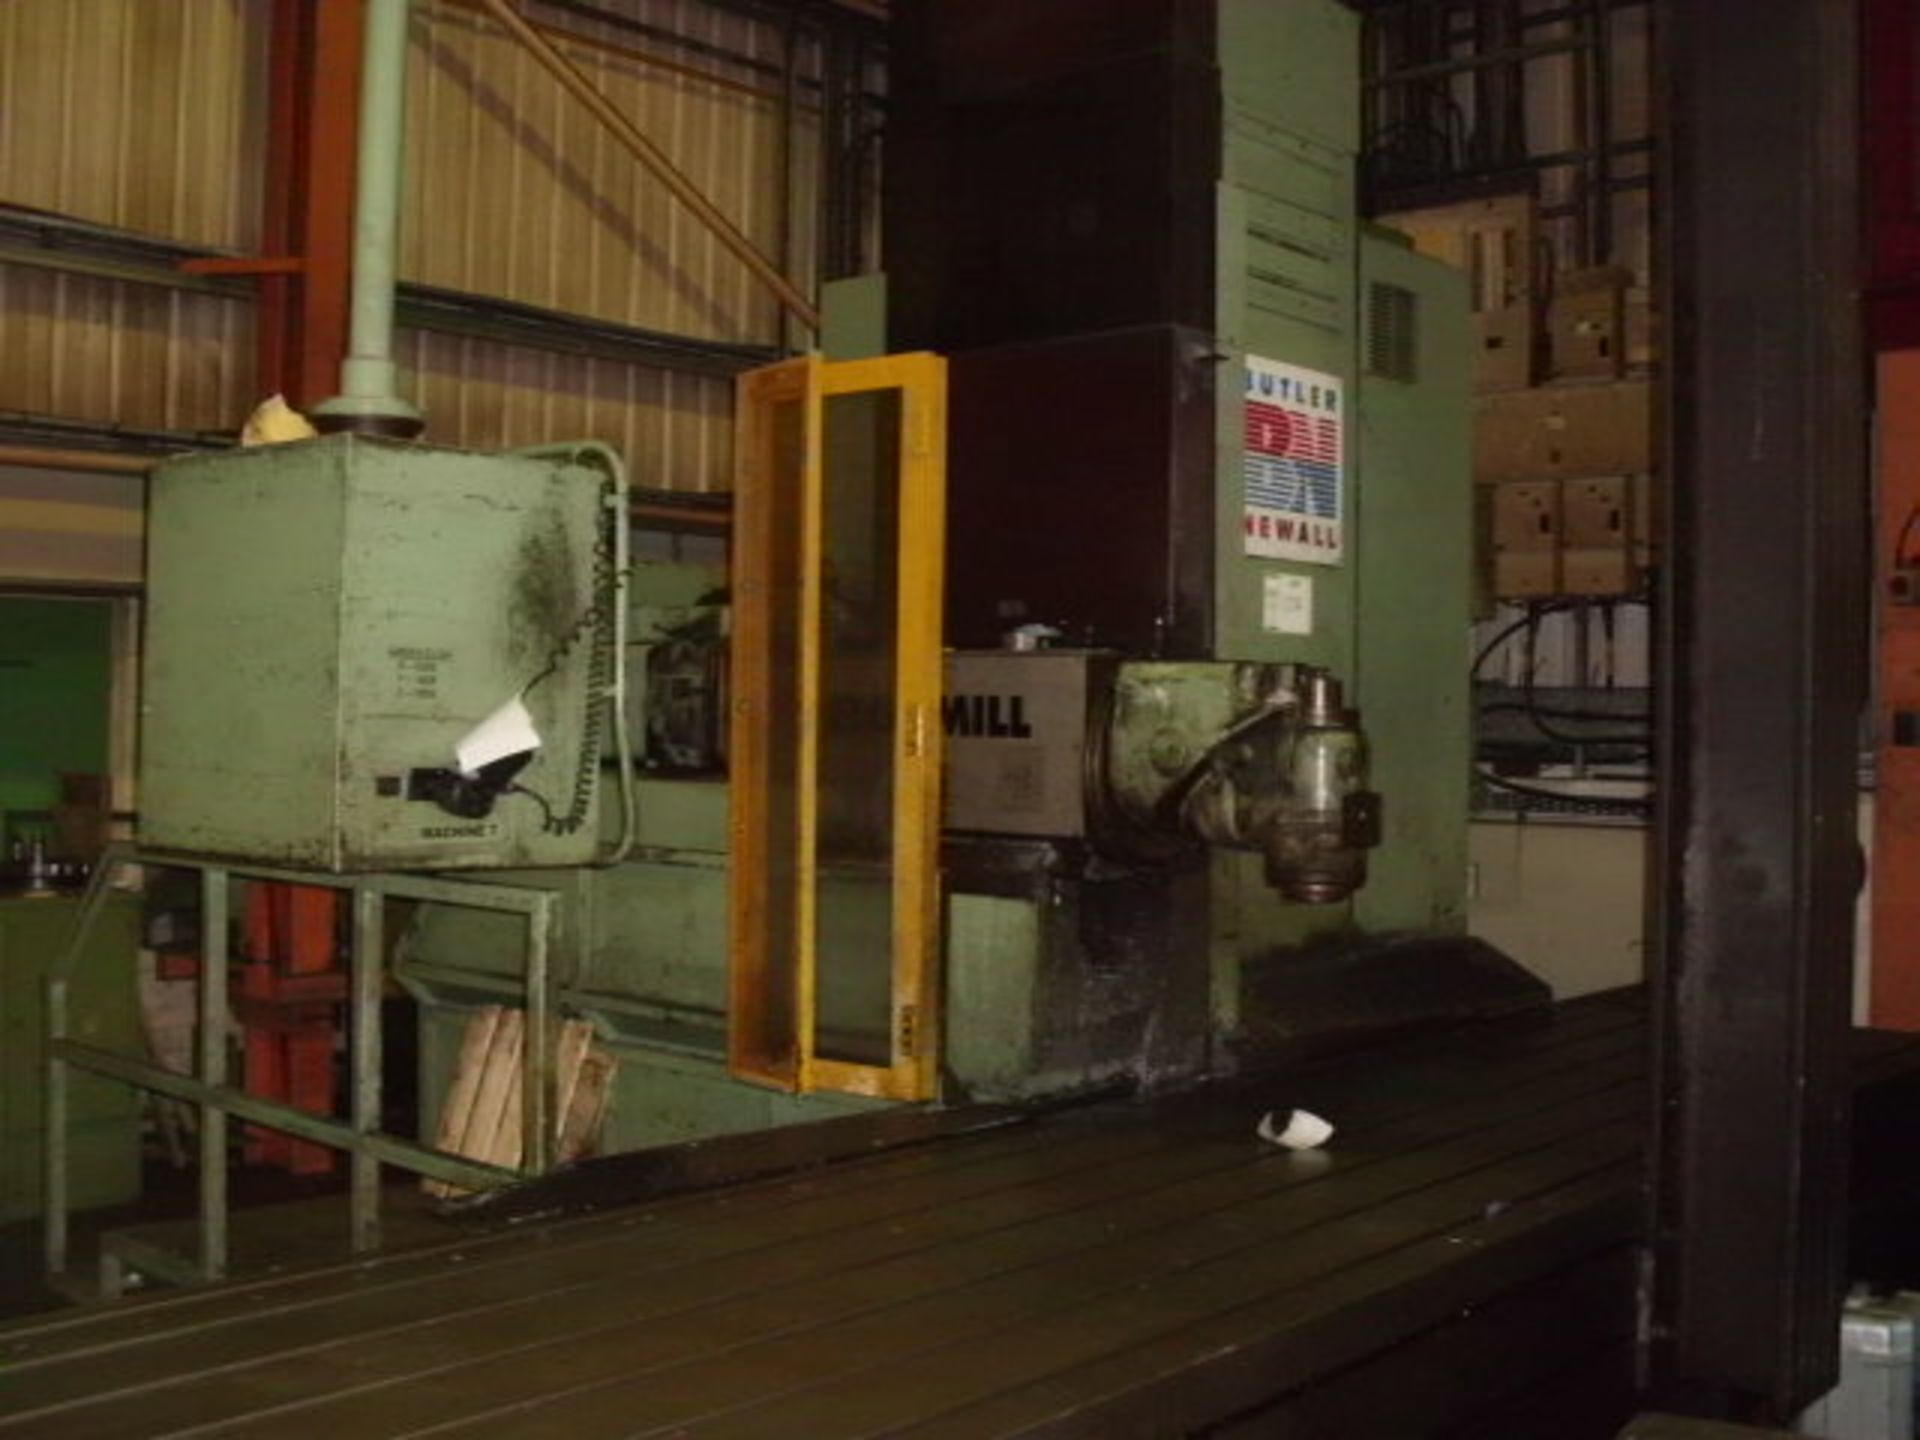 BUTLER NEWALL ELGAMILL CNC bed mill, table 8000 x 1200mm, Heidenhain 415 controls, X - 6202, Y -